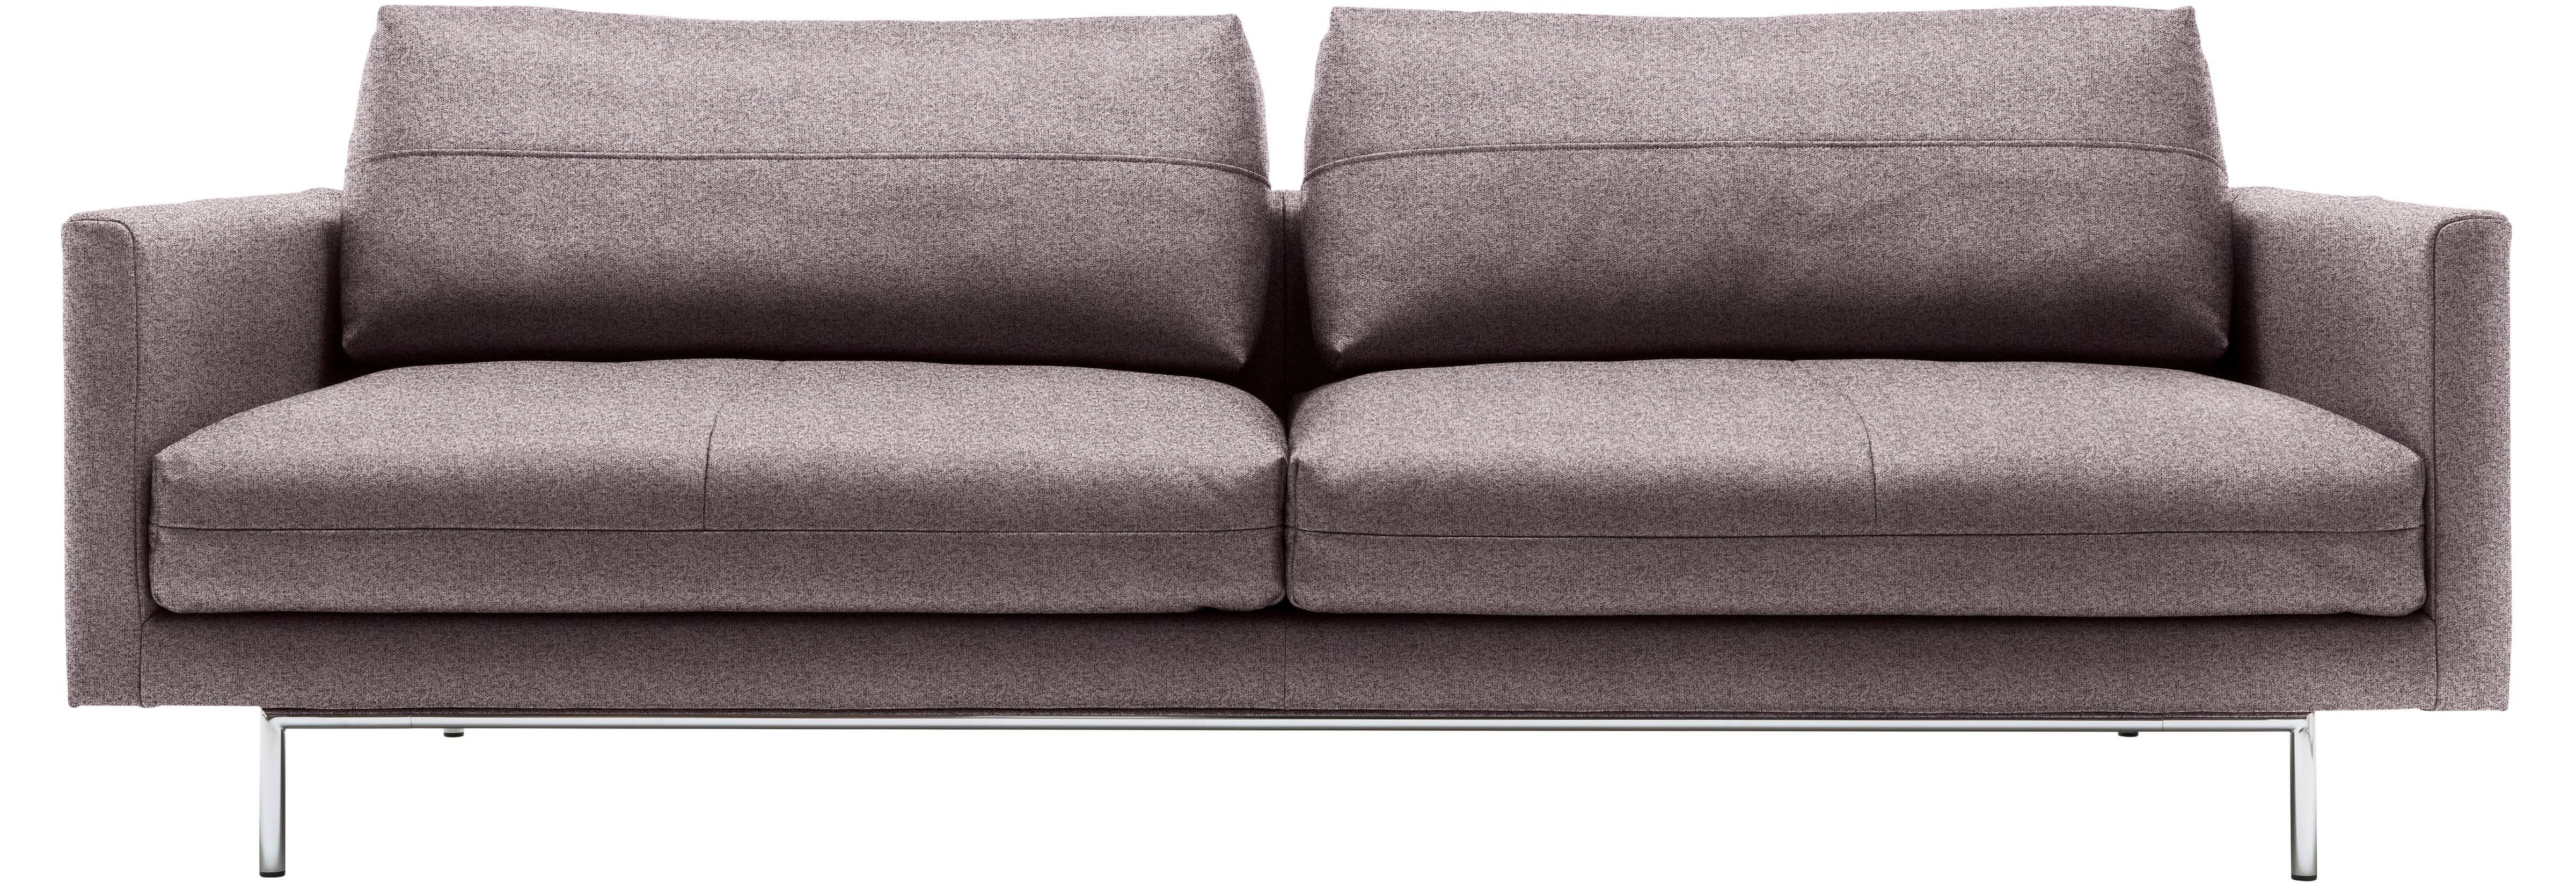 hülsta sofa 4-Sitzer violett-stgr | purpurviolett / steingrau